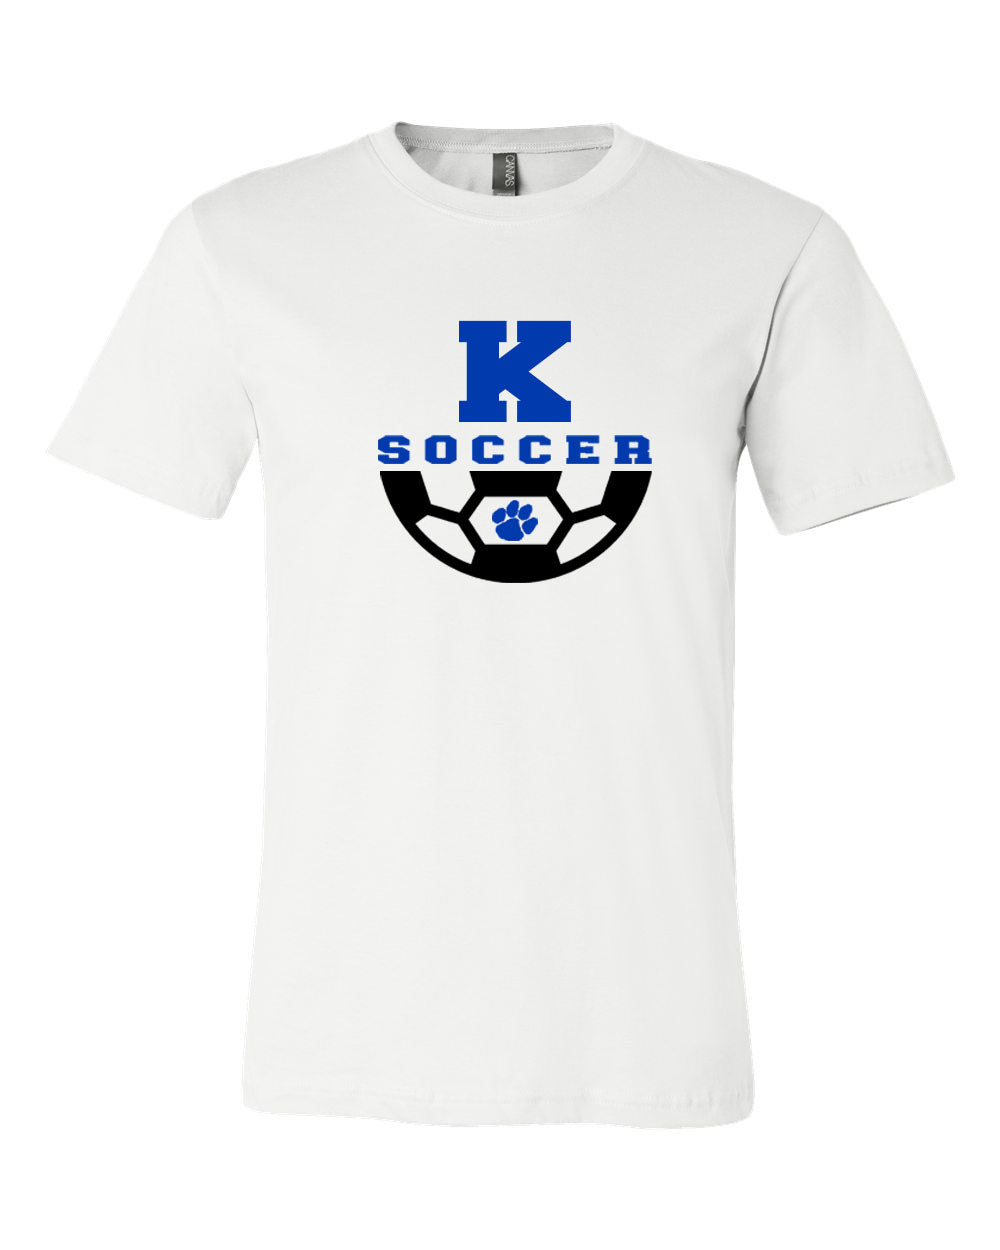 Kittatinny Soccer Design 4 T-Shirt